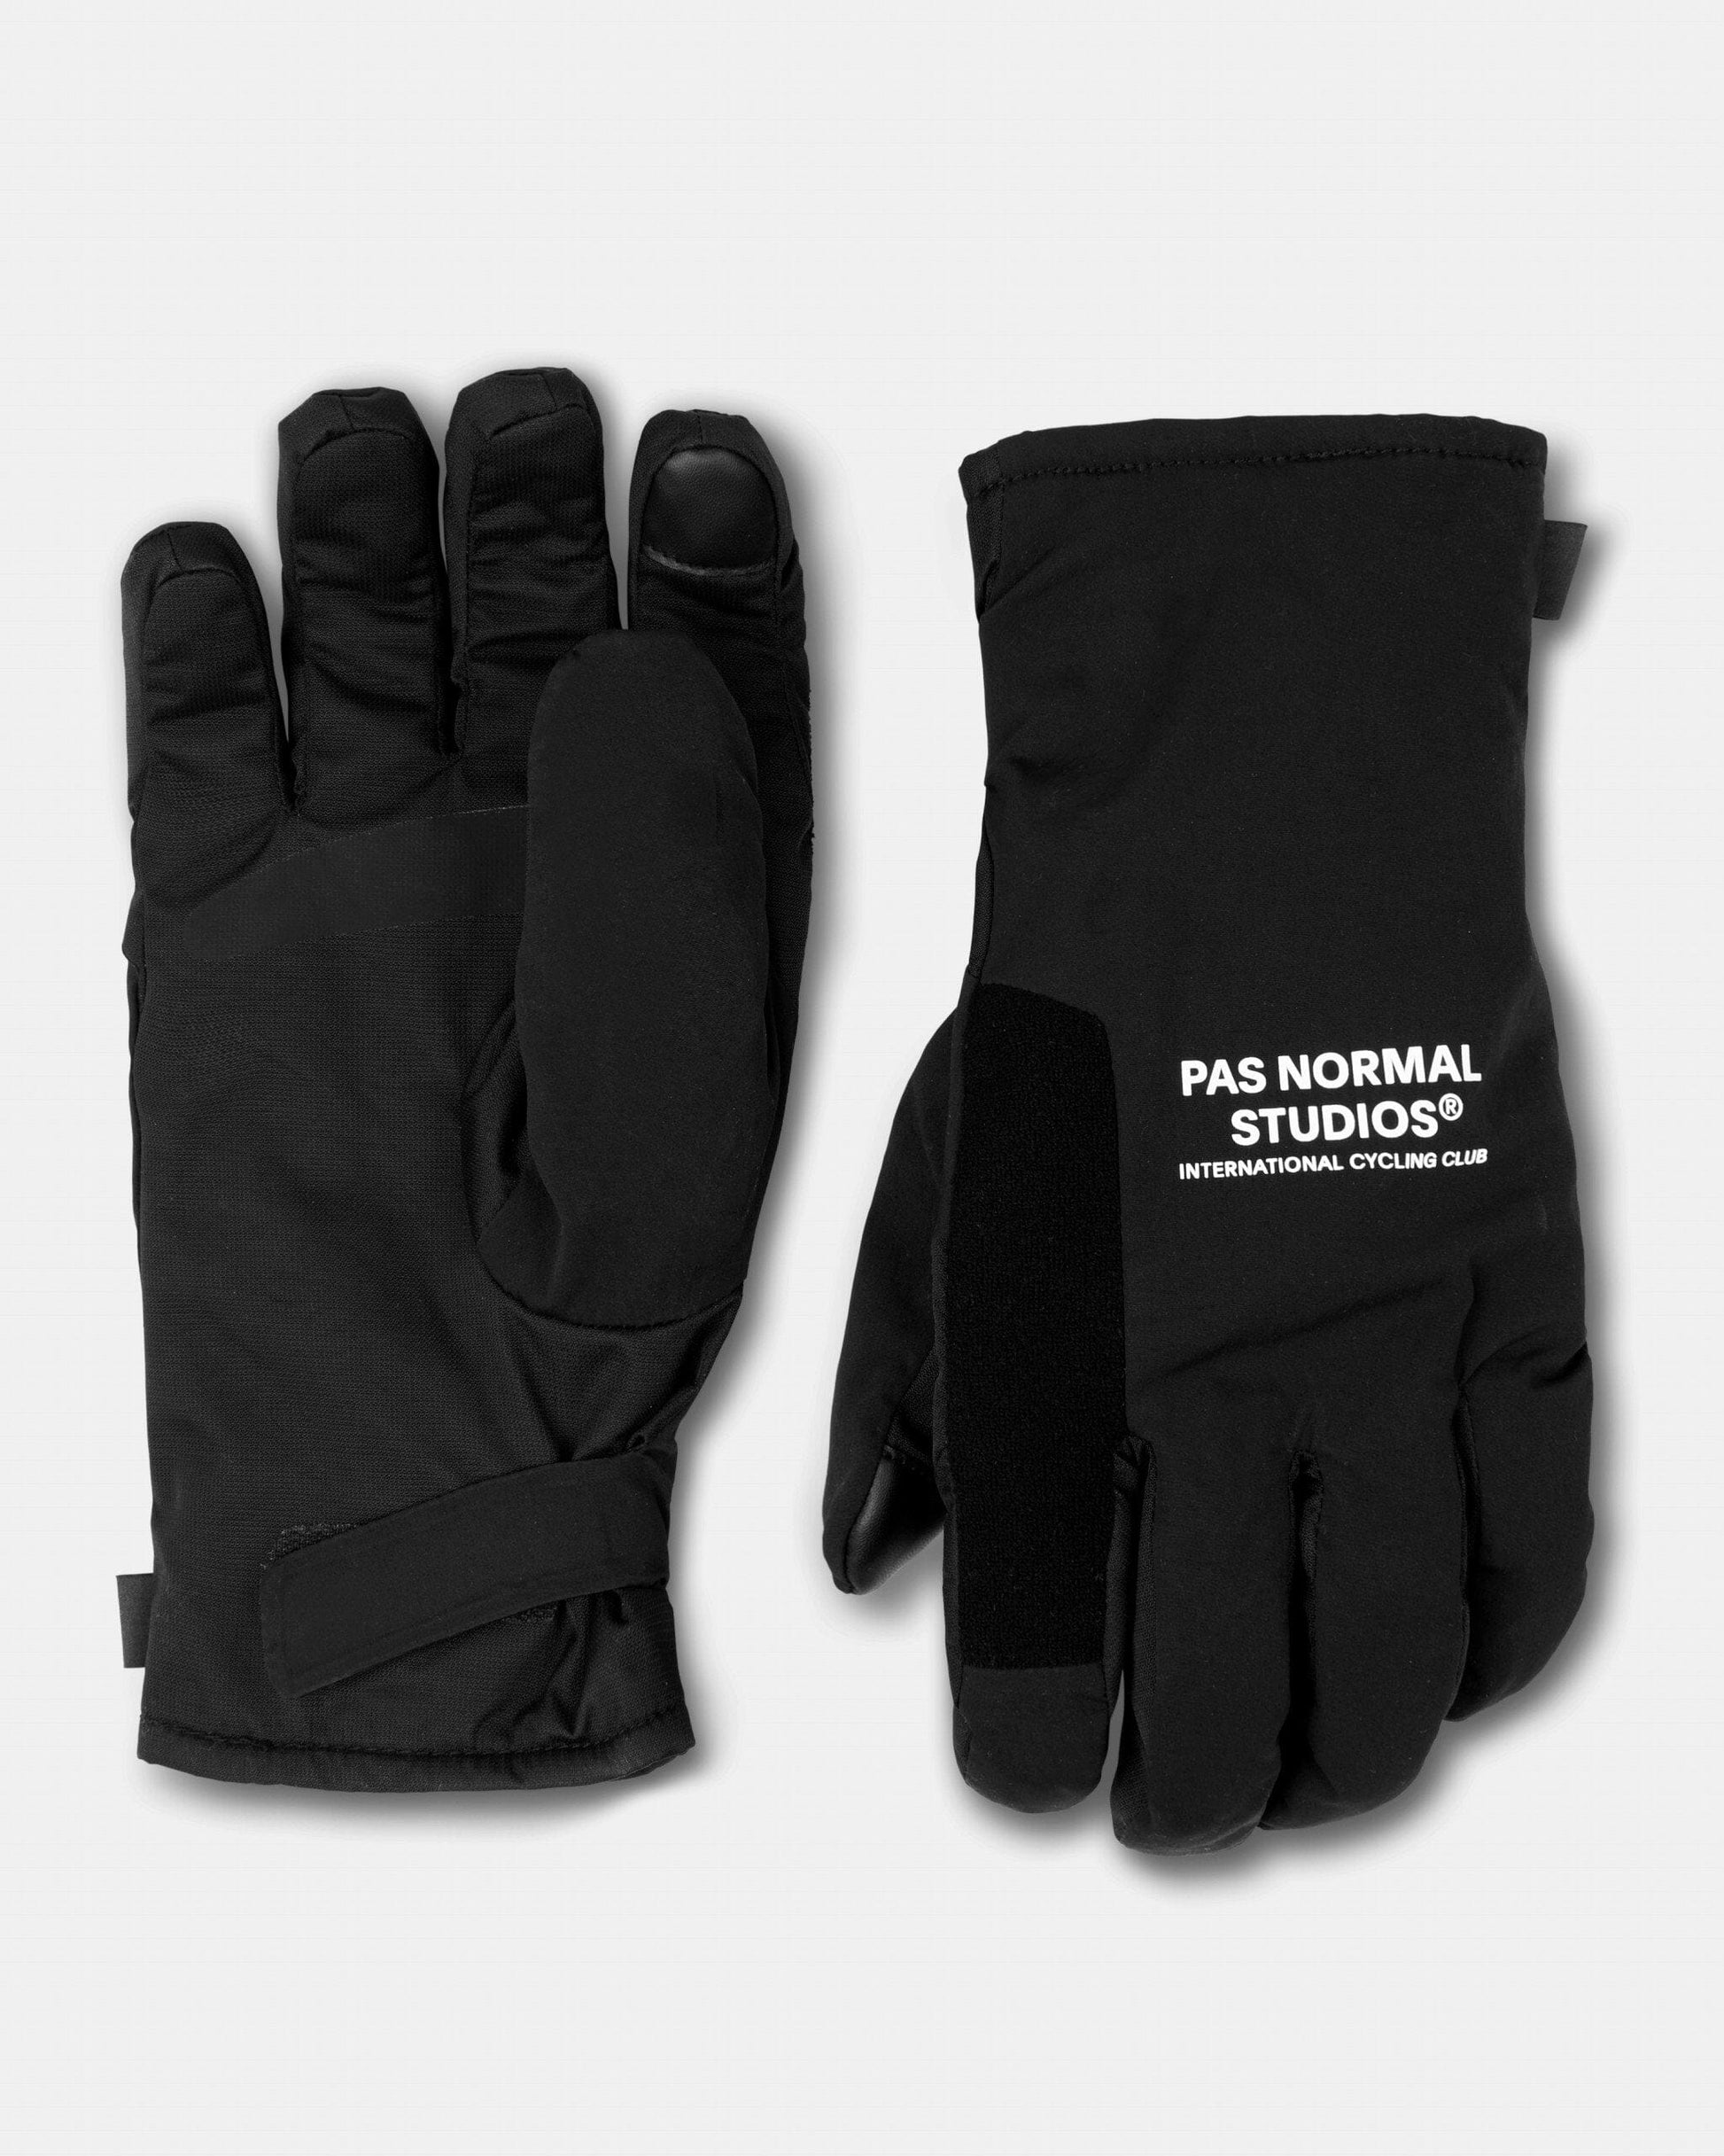 Pas Normal Studios - Deep Winter Gloves Pas Normal Studios 